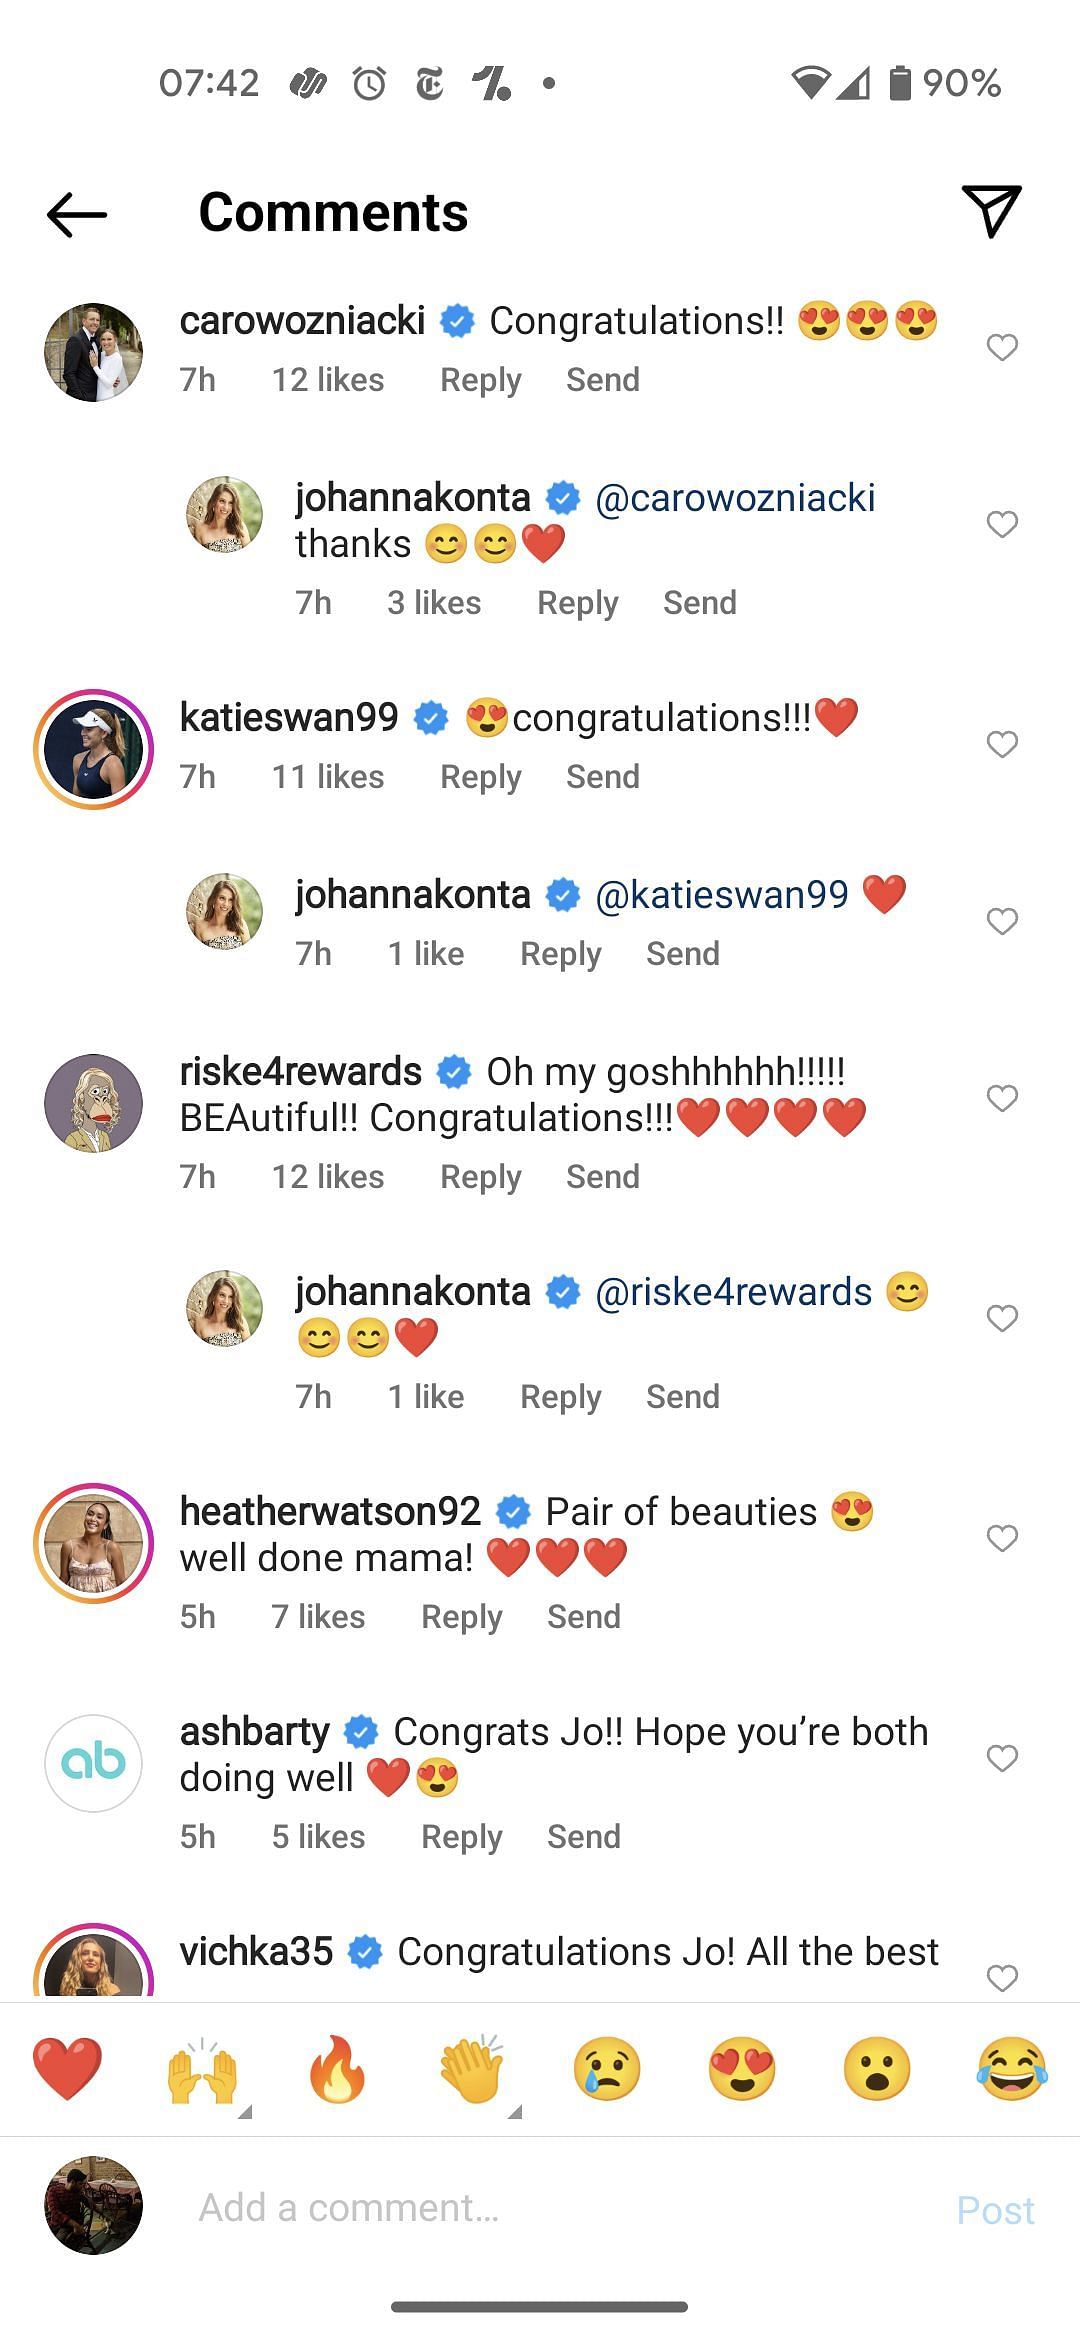 Caroline Wozniacki, Victoria Azarenka and Ashleigh Barty were among the players to have congratulated Johanna Konta on the birth of her daughter